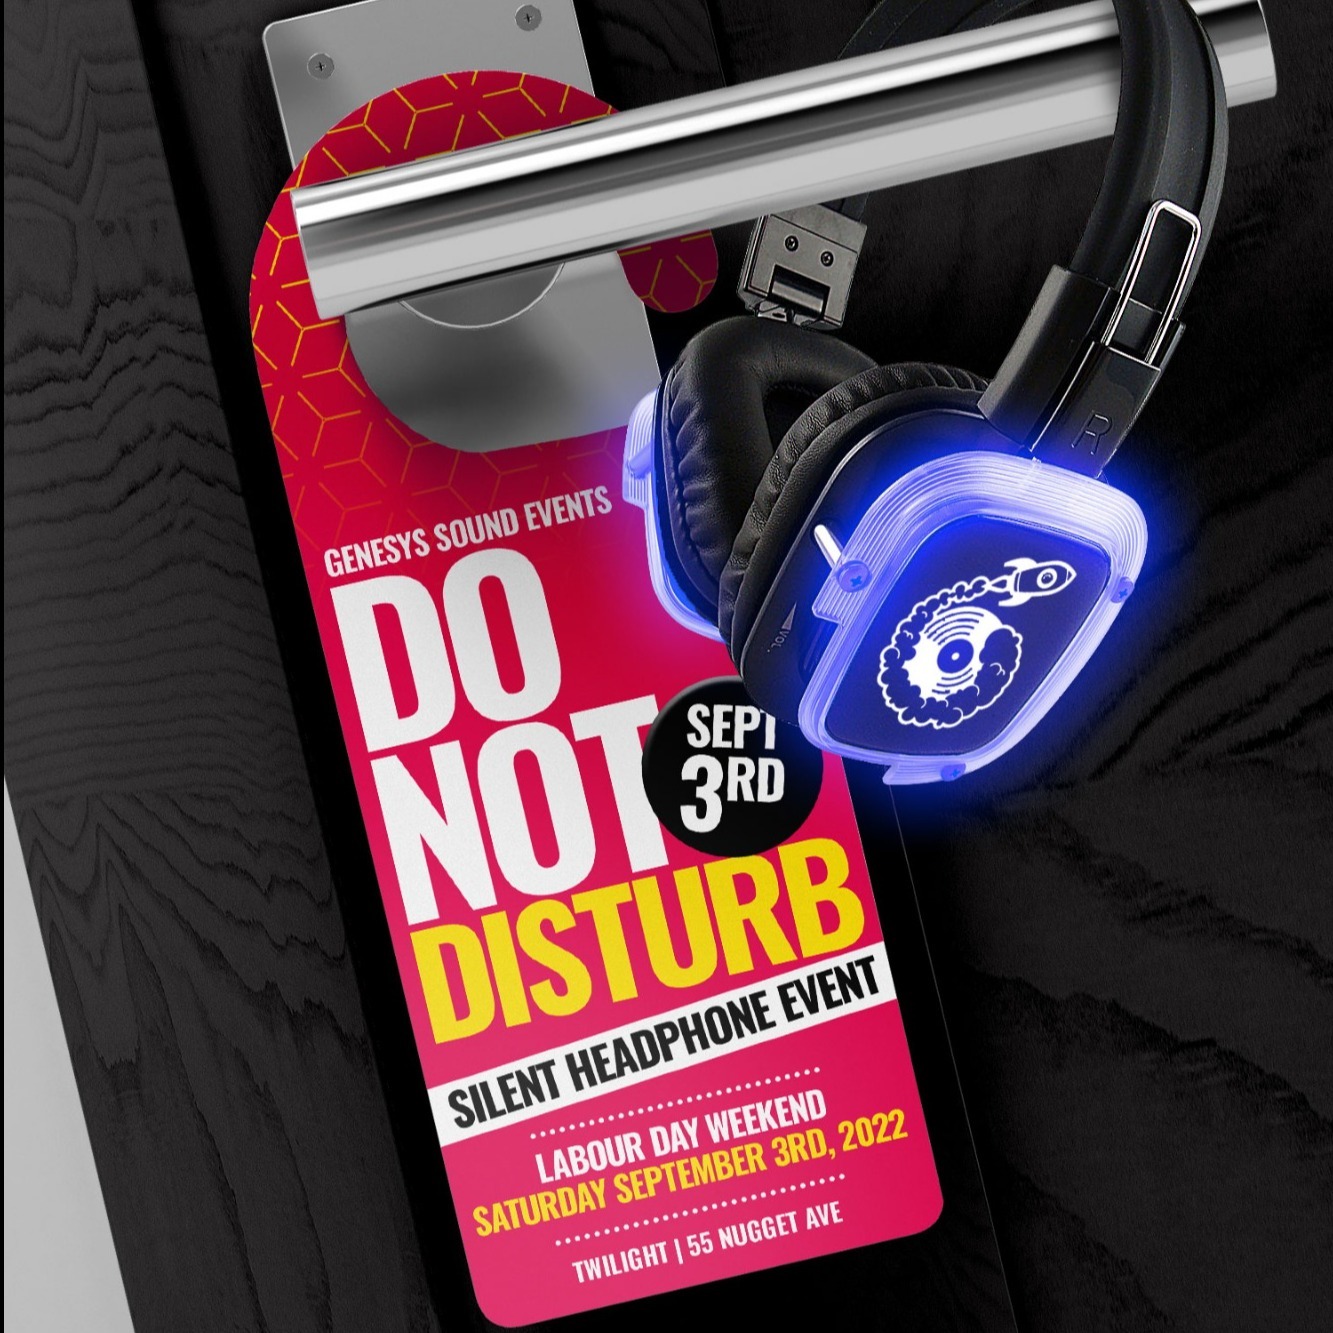 Do Not Disturb: The Silent Headphone Event